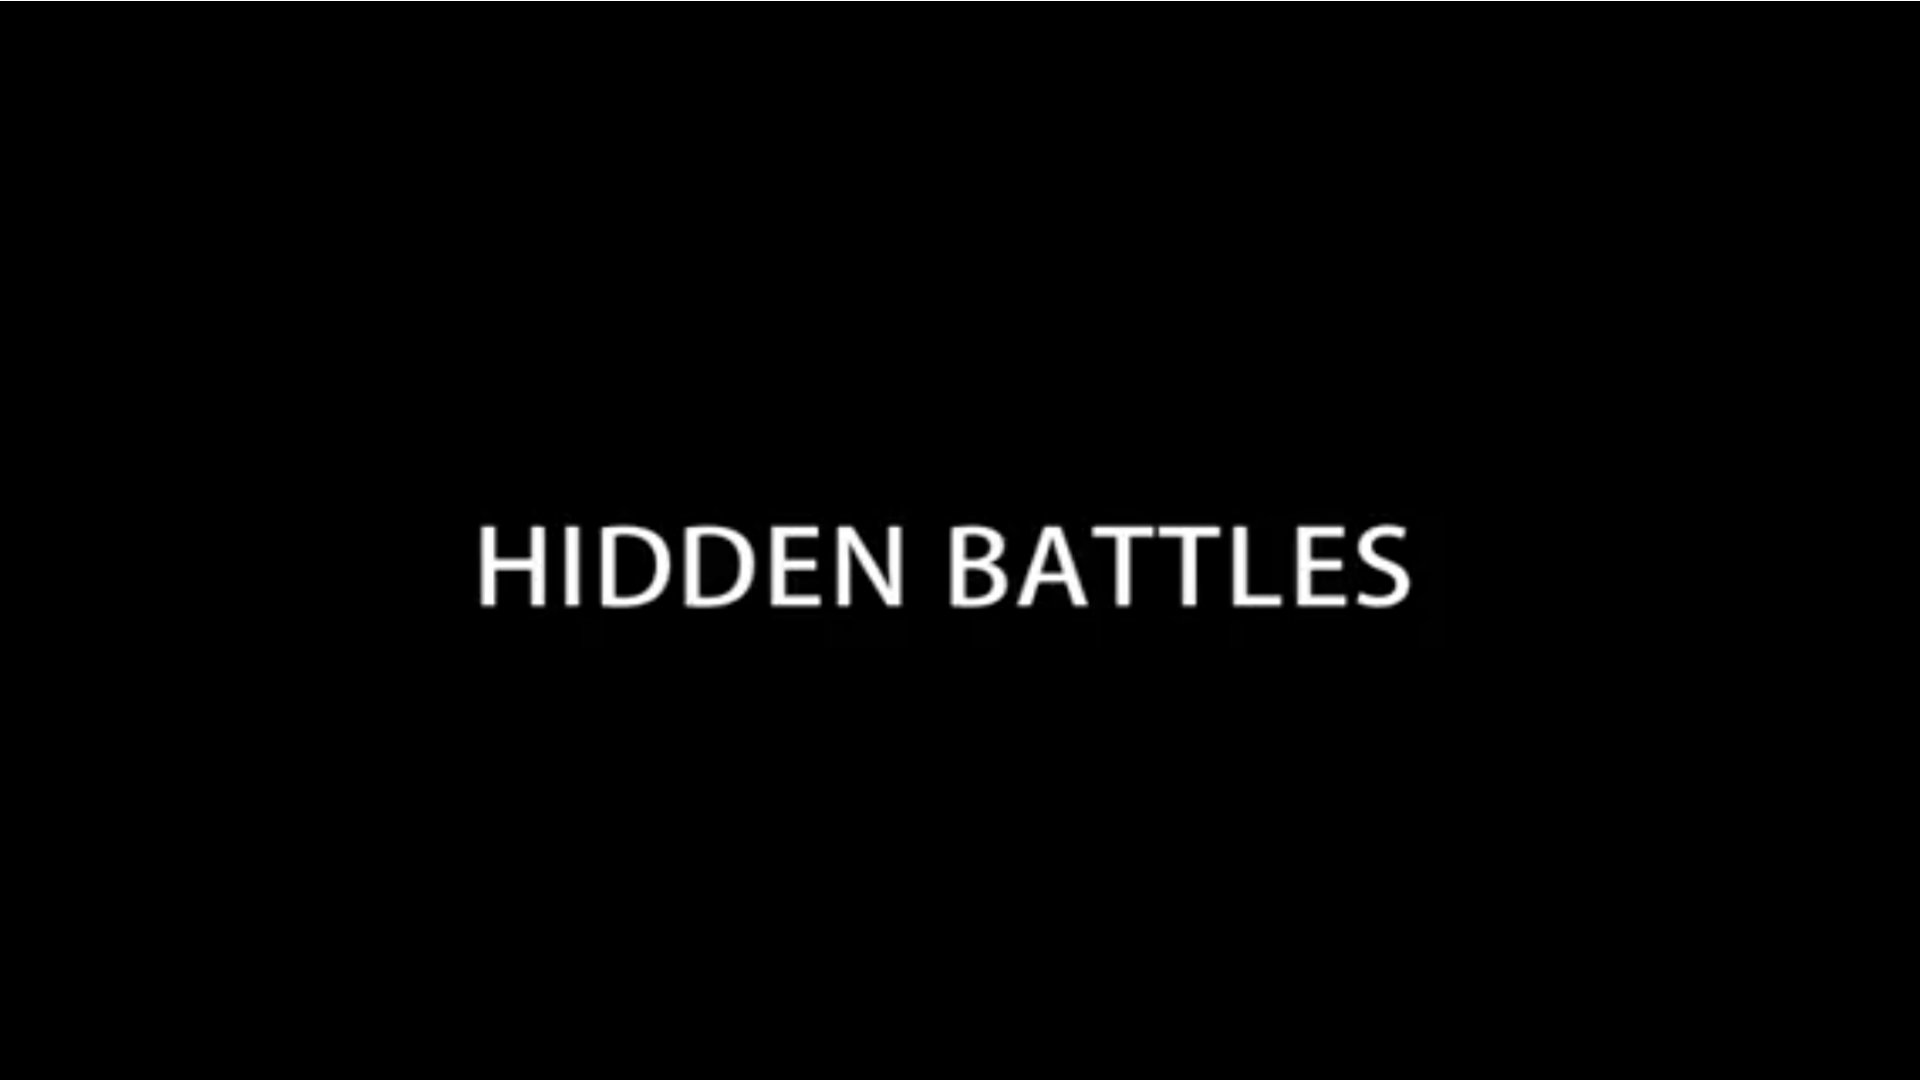 Watch Full Movie - Hidden Battles